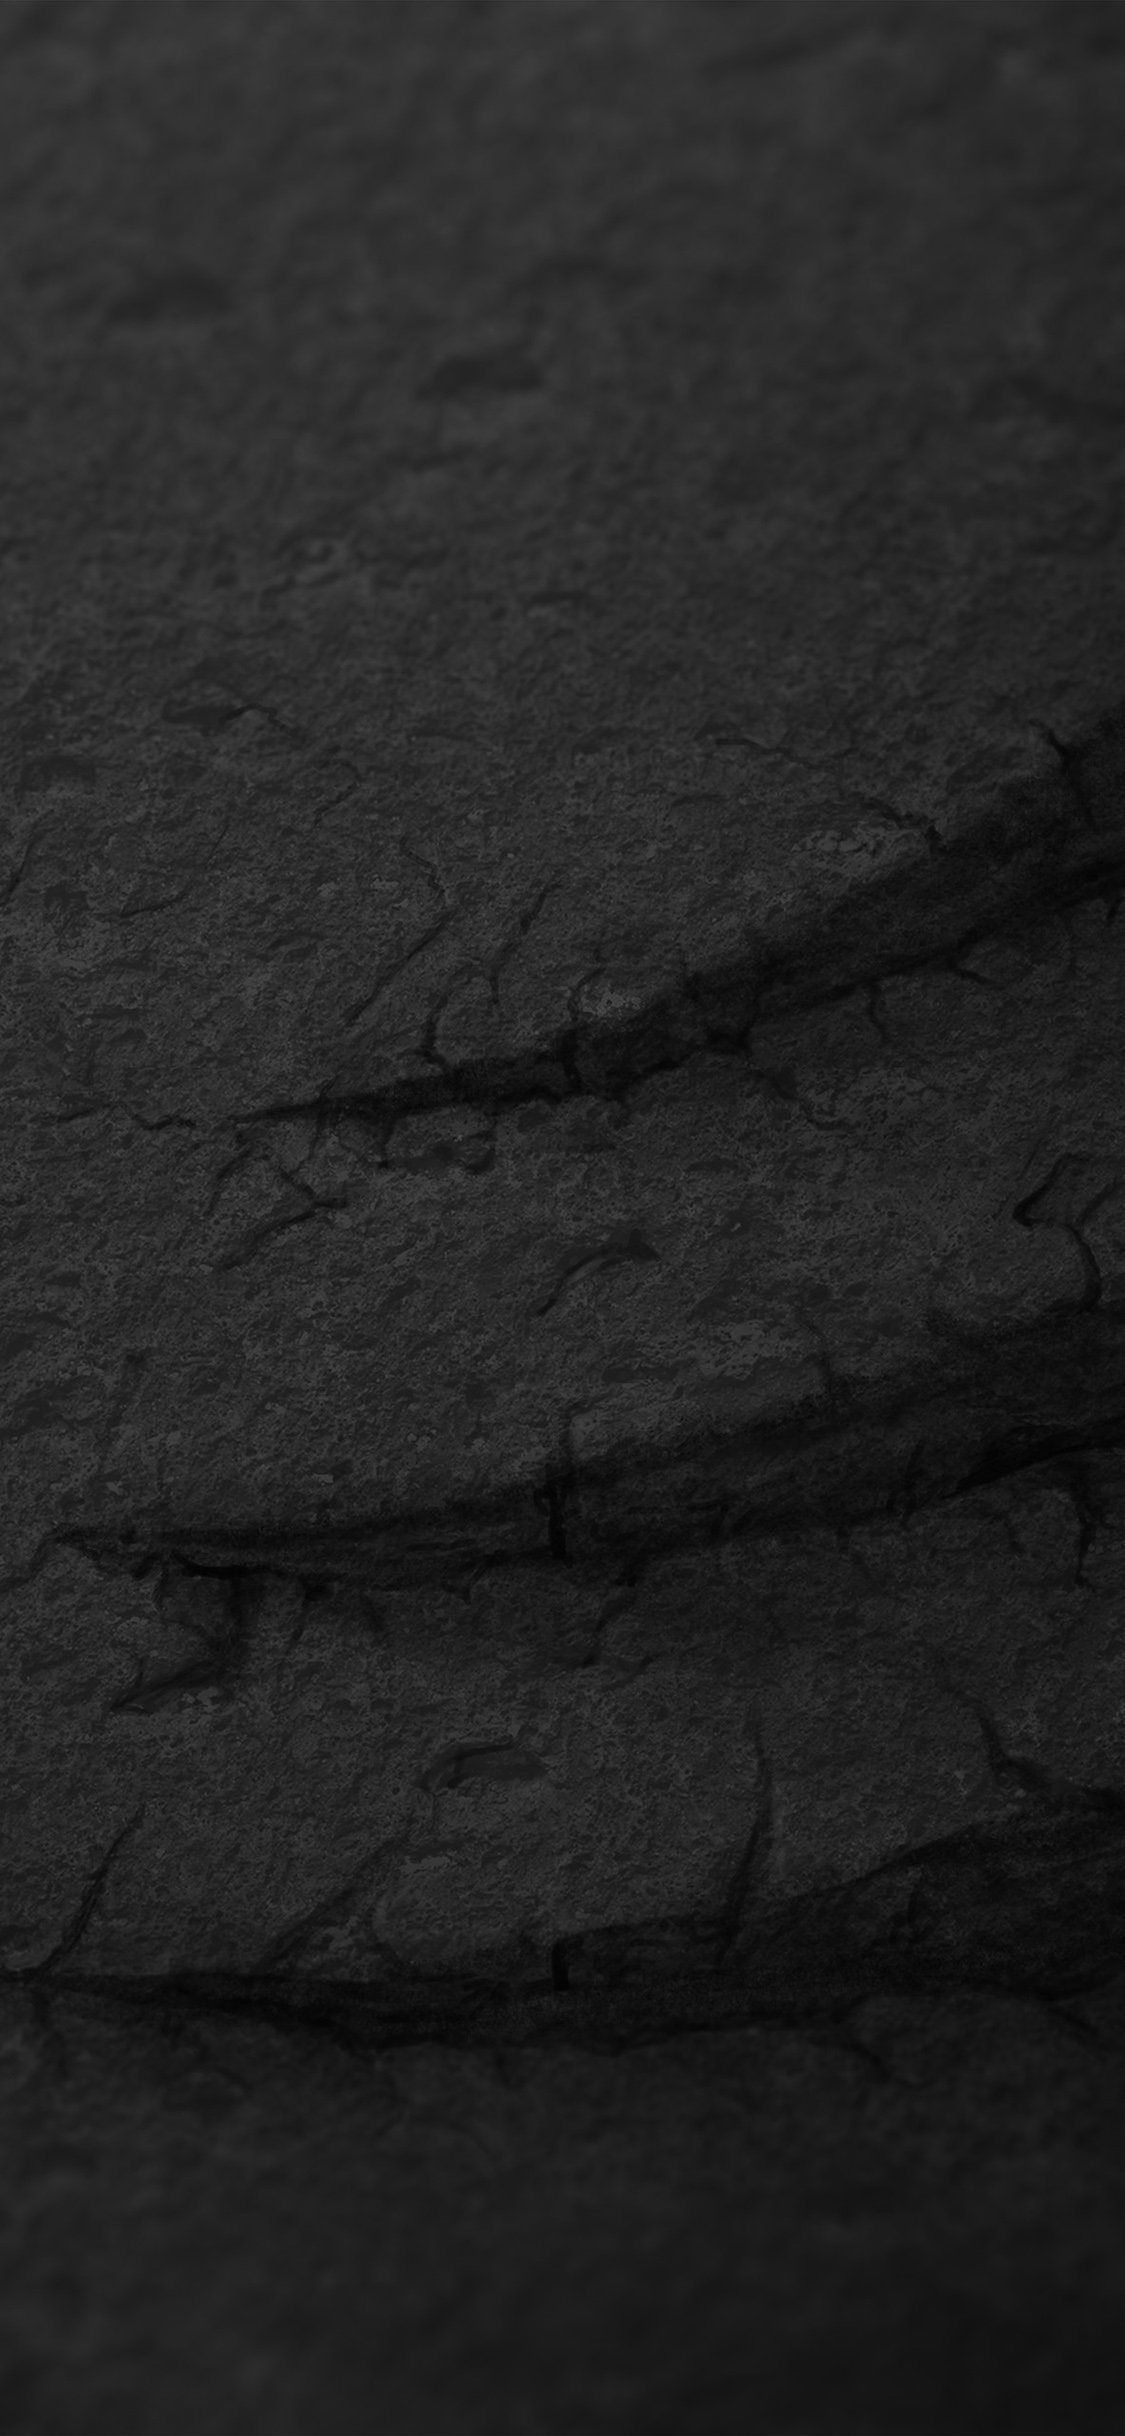 Rock dark pattern texture iPhone X Wallpaper Free Download